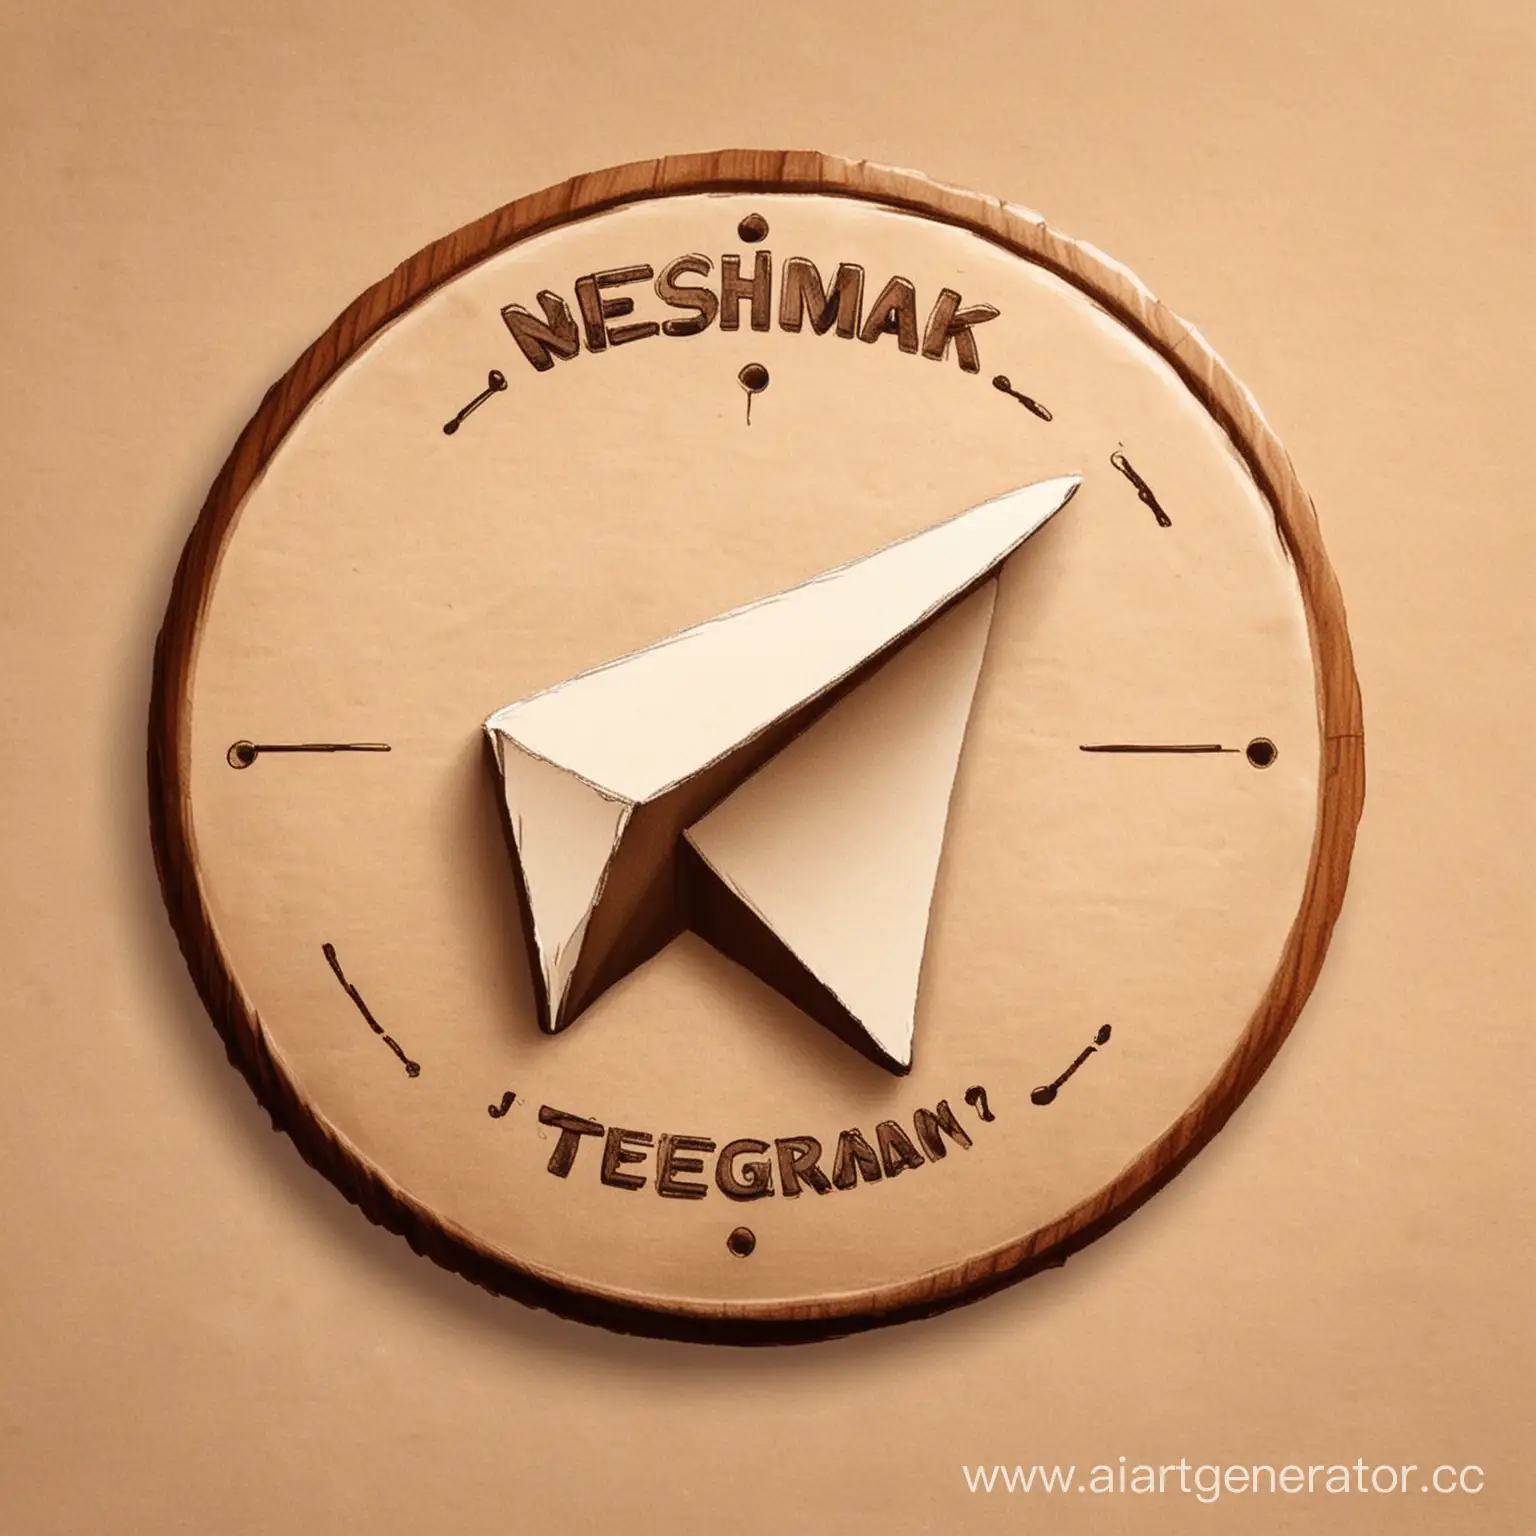 нарисуй логотип канала телеграмм с названием неижмак